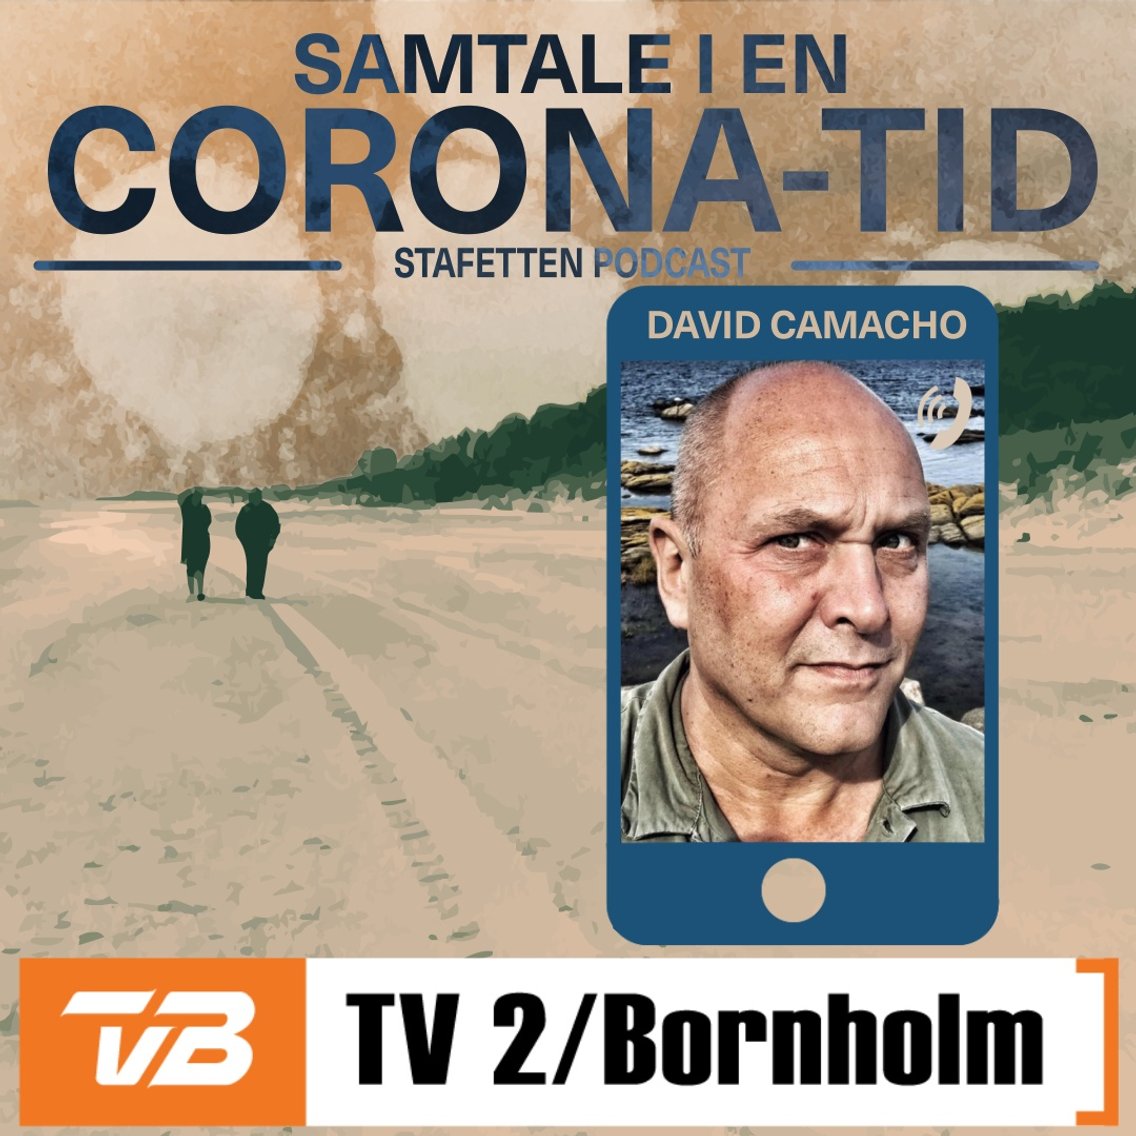 Stafetten - Samtale i en corona-tid - Cover Image